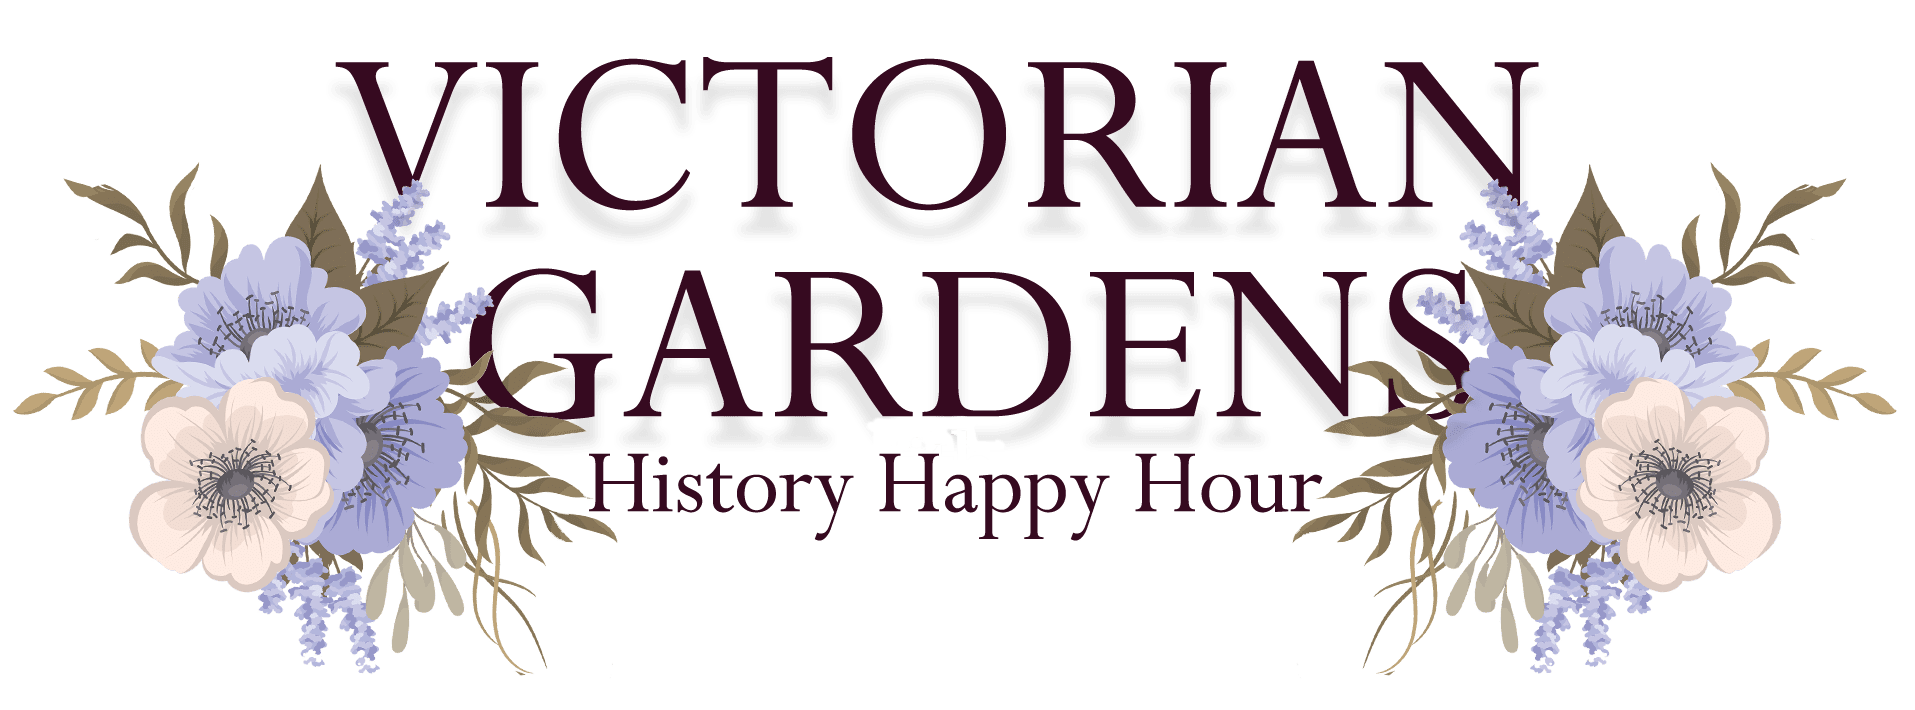 Victorian Garden Logo